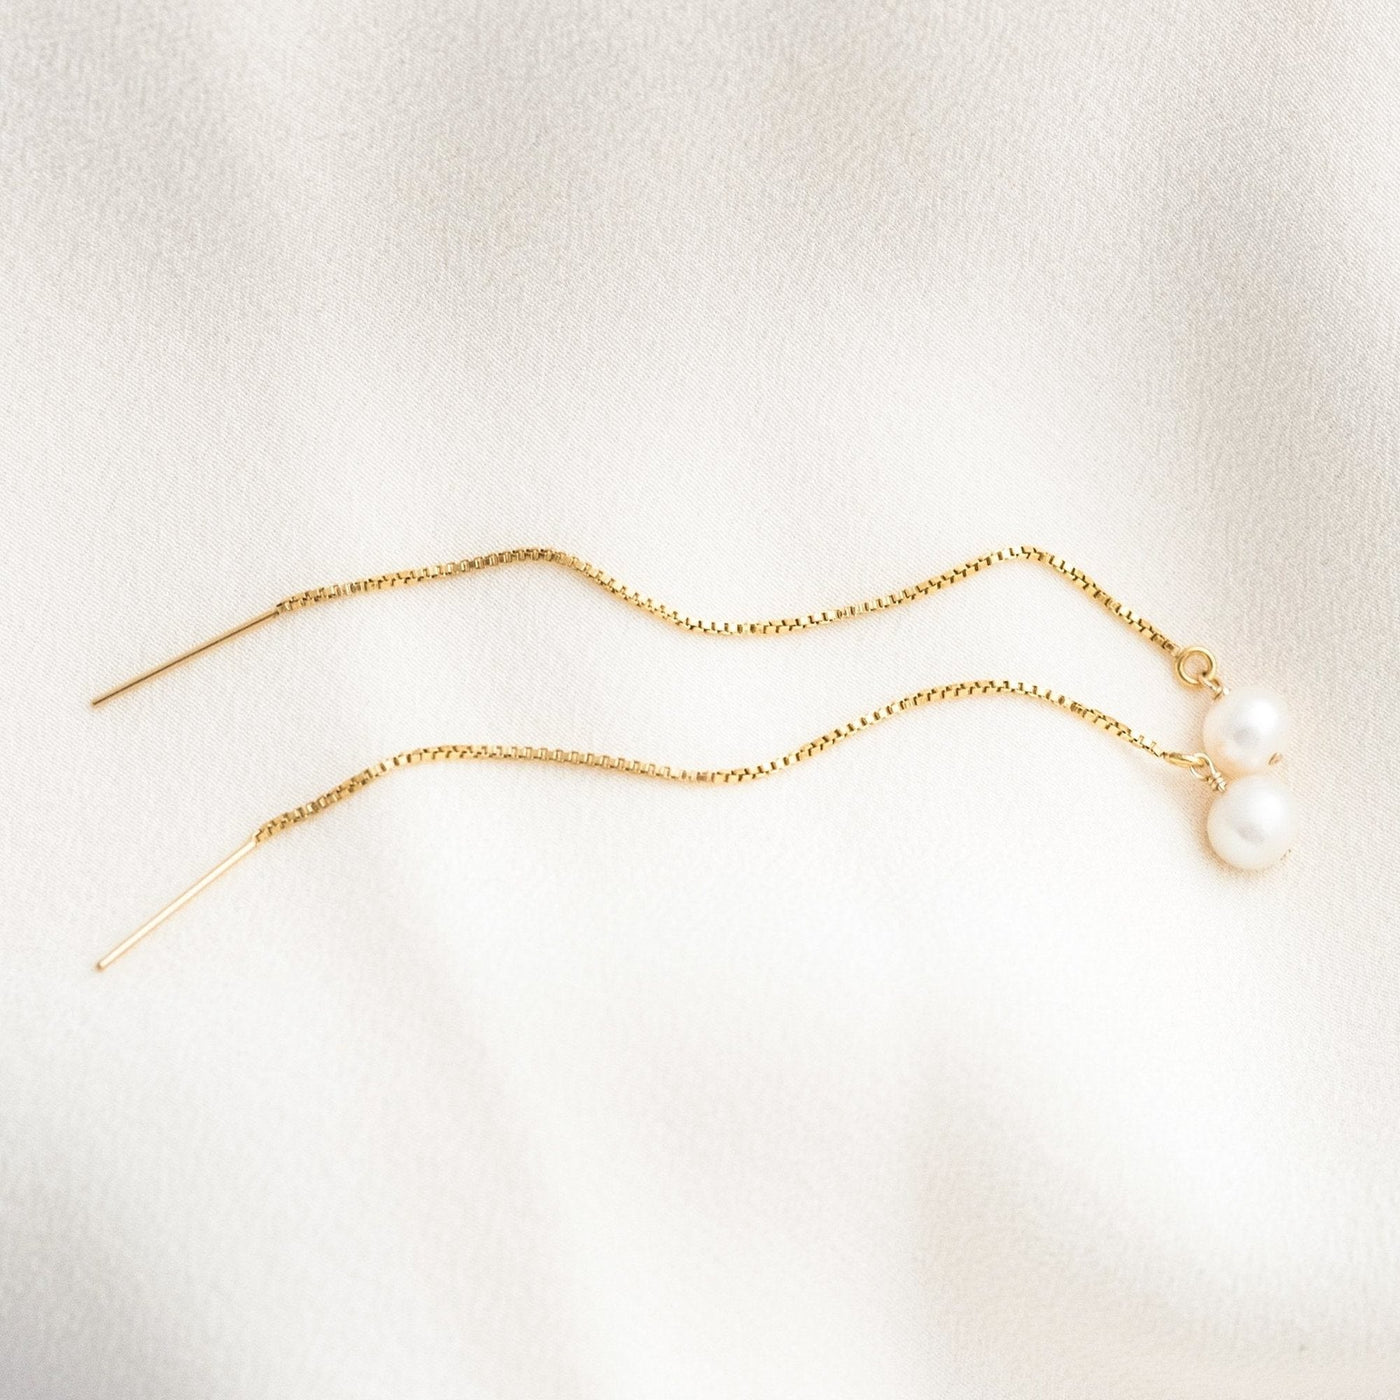 Pearl Threader Earrings by Simple & Dainty Jewelry